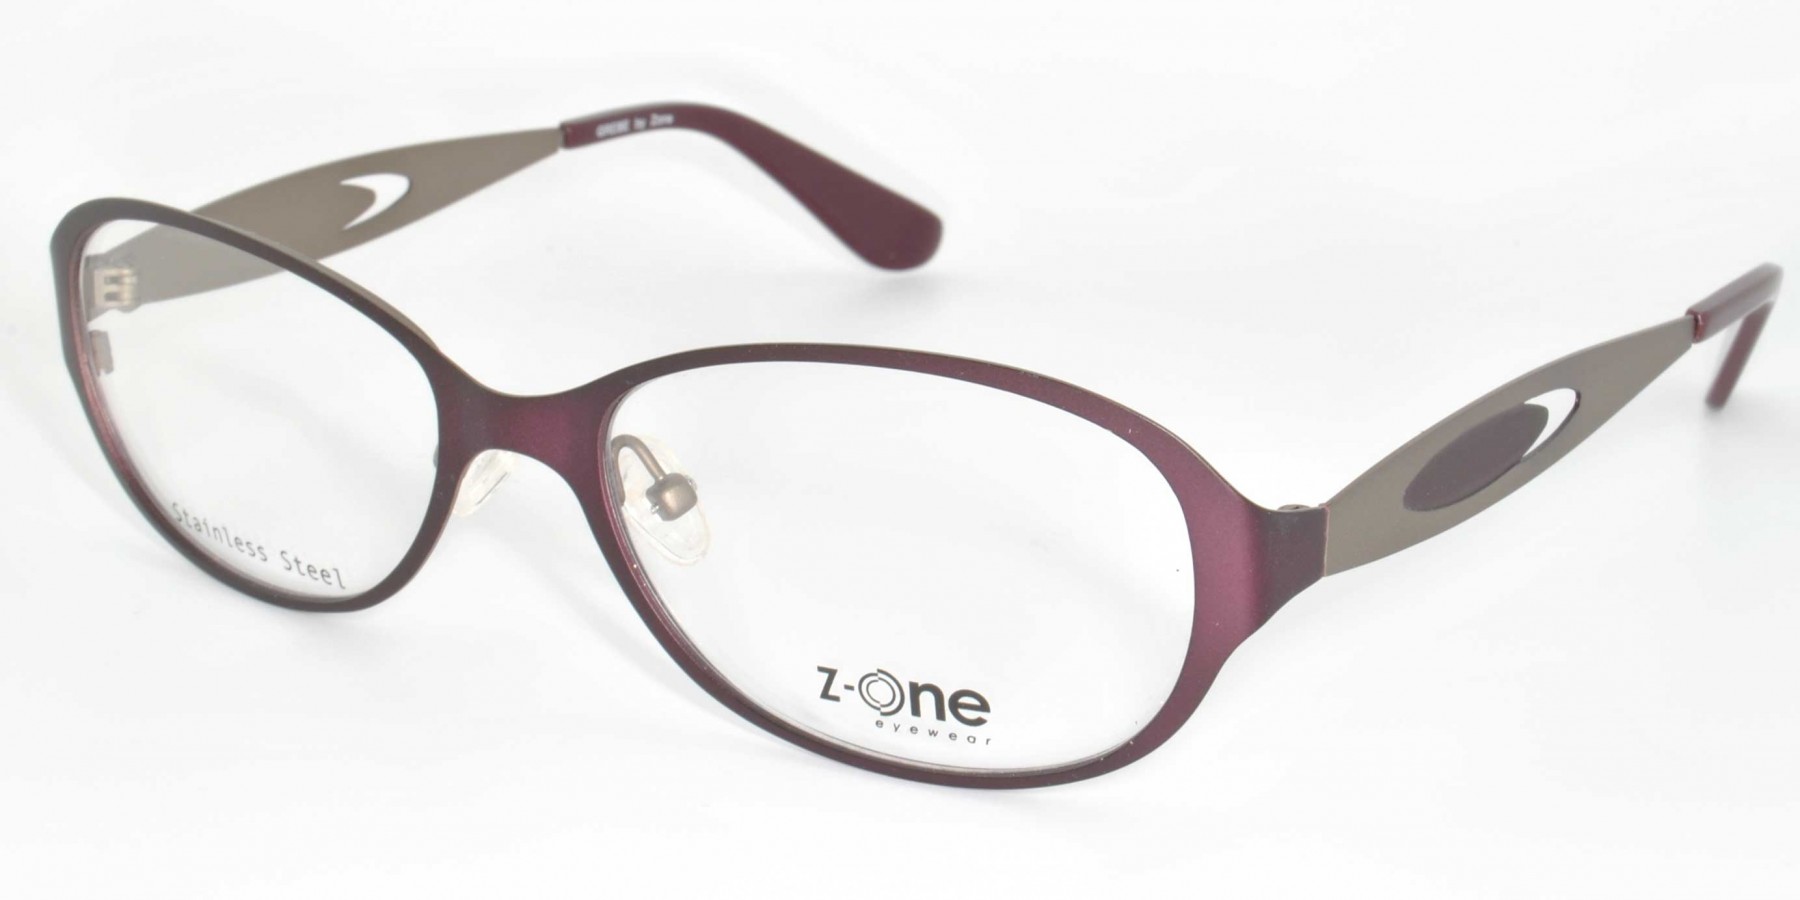 Z-One Grebe Prescription Glasses